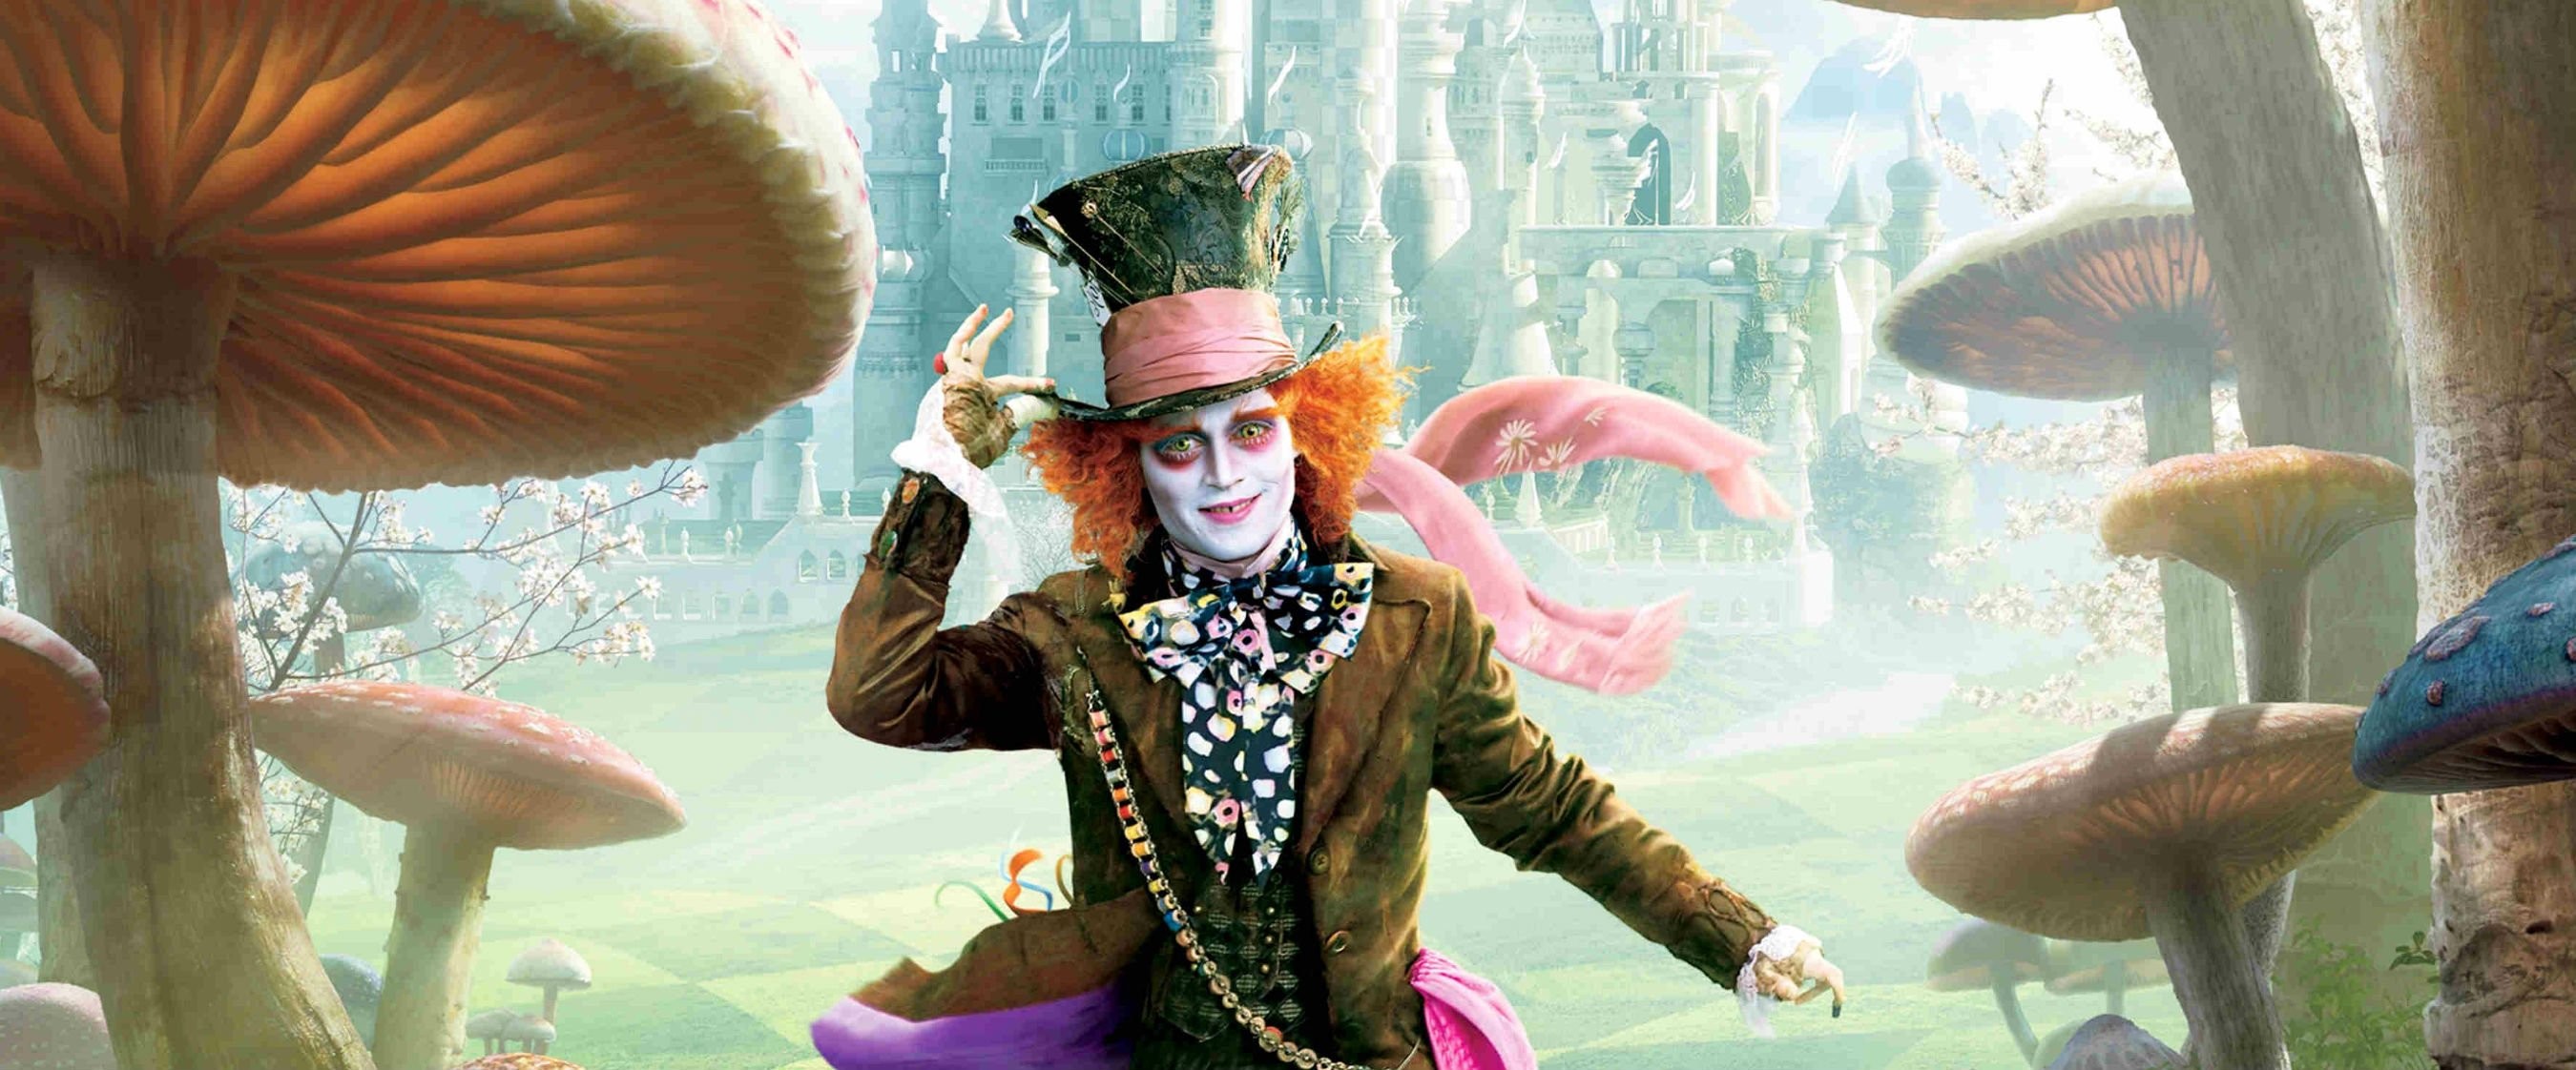 Alice In Wonderland Dvd Cover - HD Wallpaper 